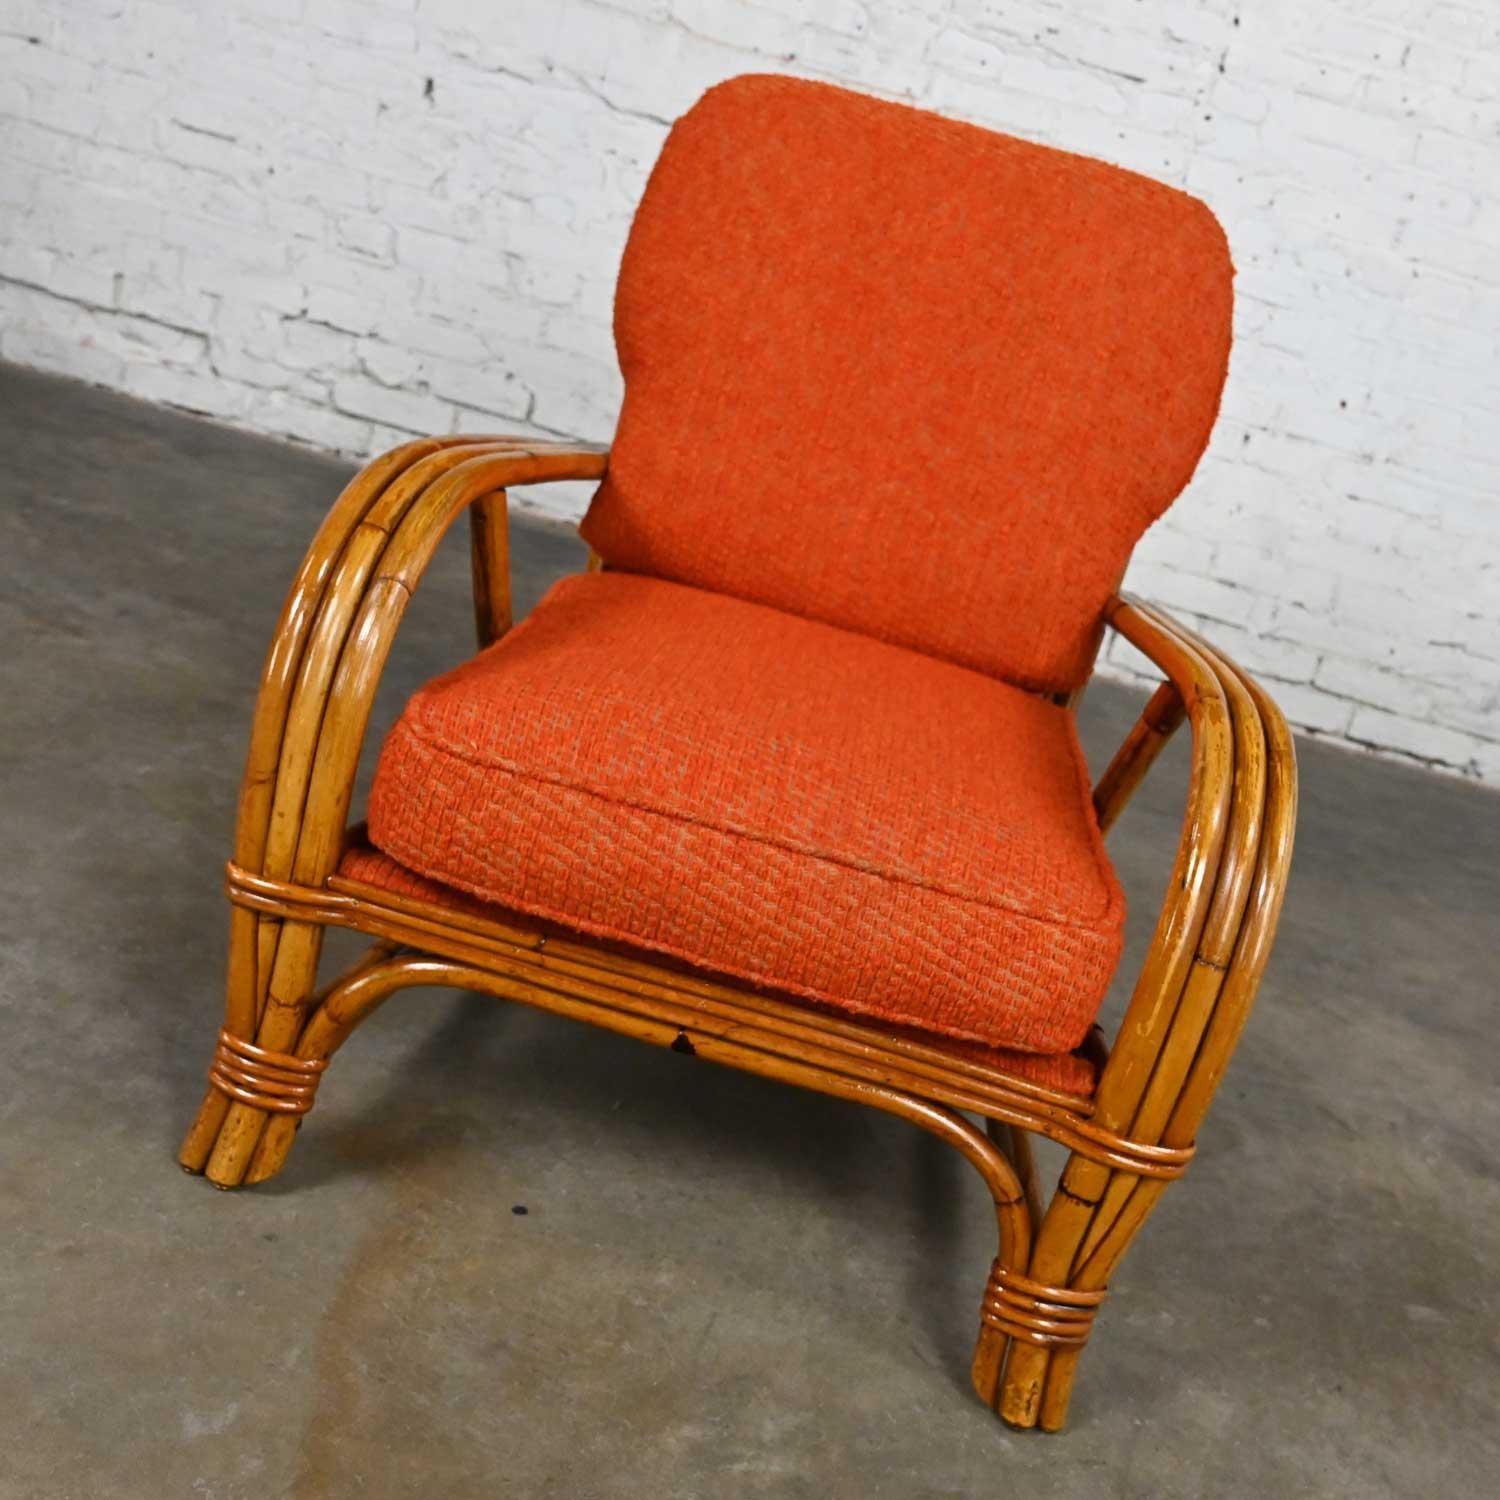 Triple Strand Rattan Sofa & Chair Orange Fabric Cushions Style Heywood Wakefield In Good Condition For Sale In Topeka, KS